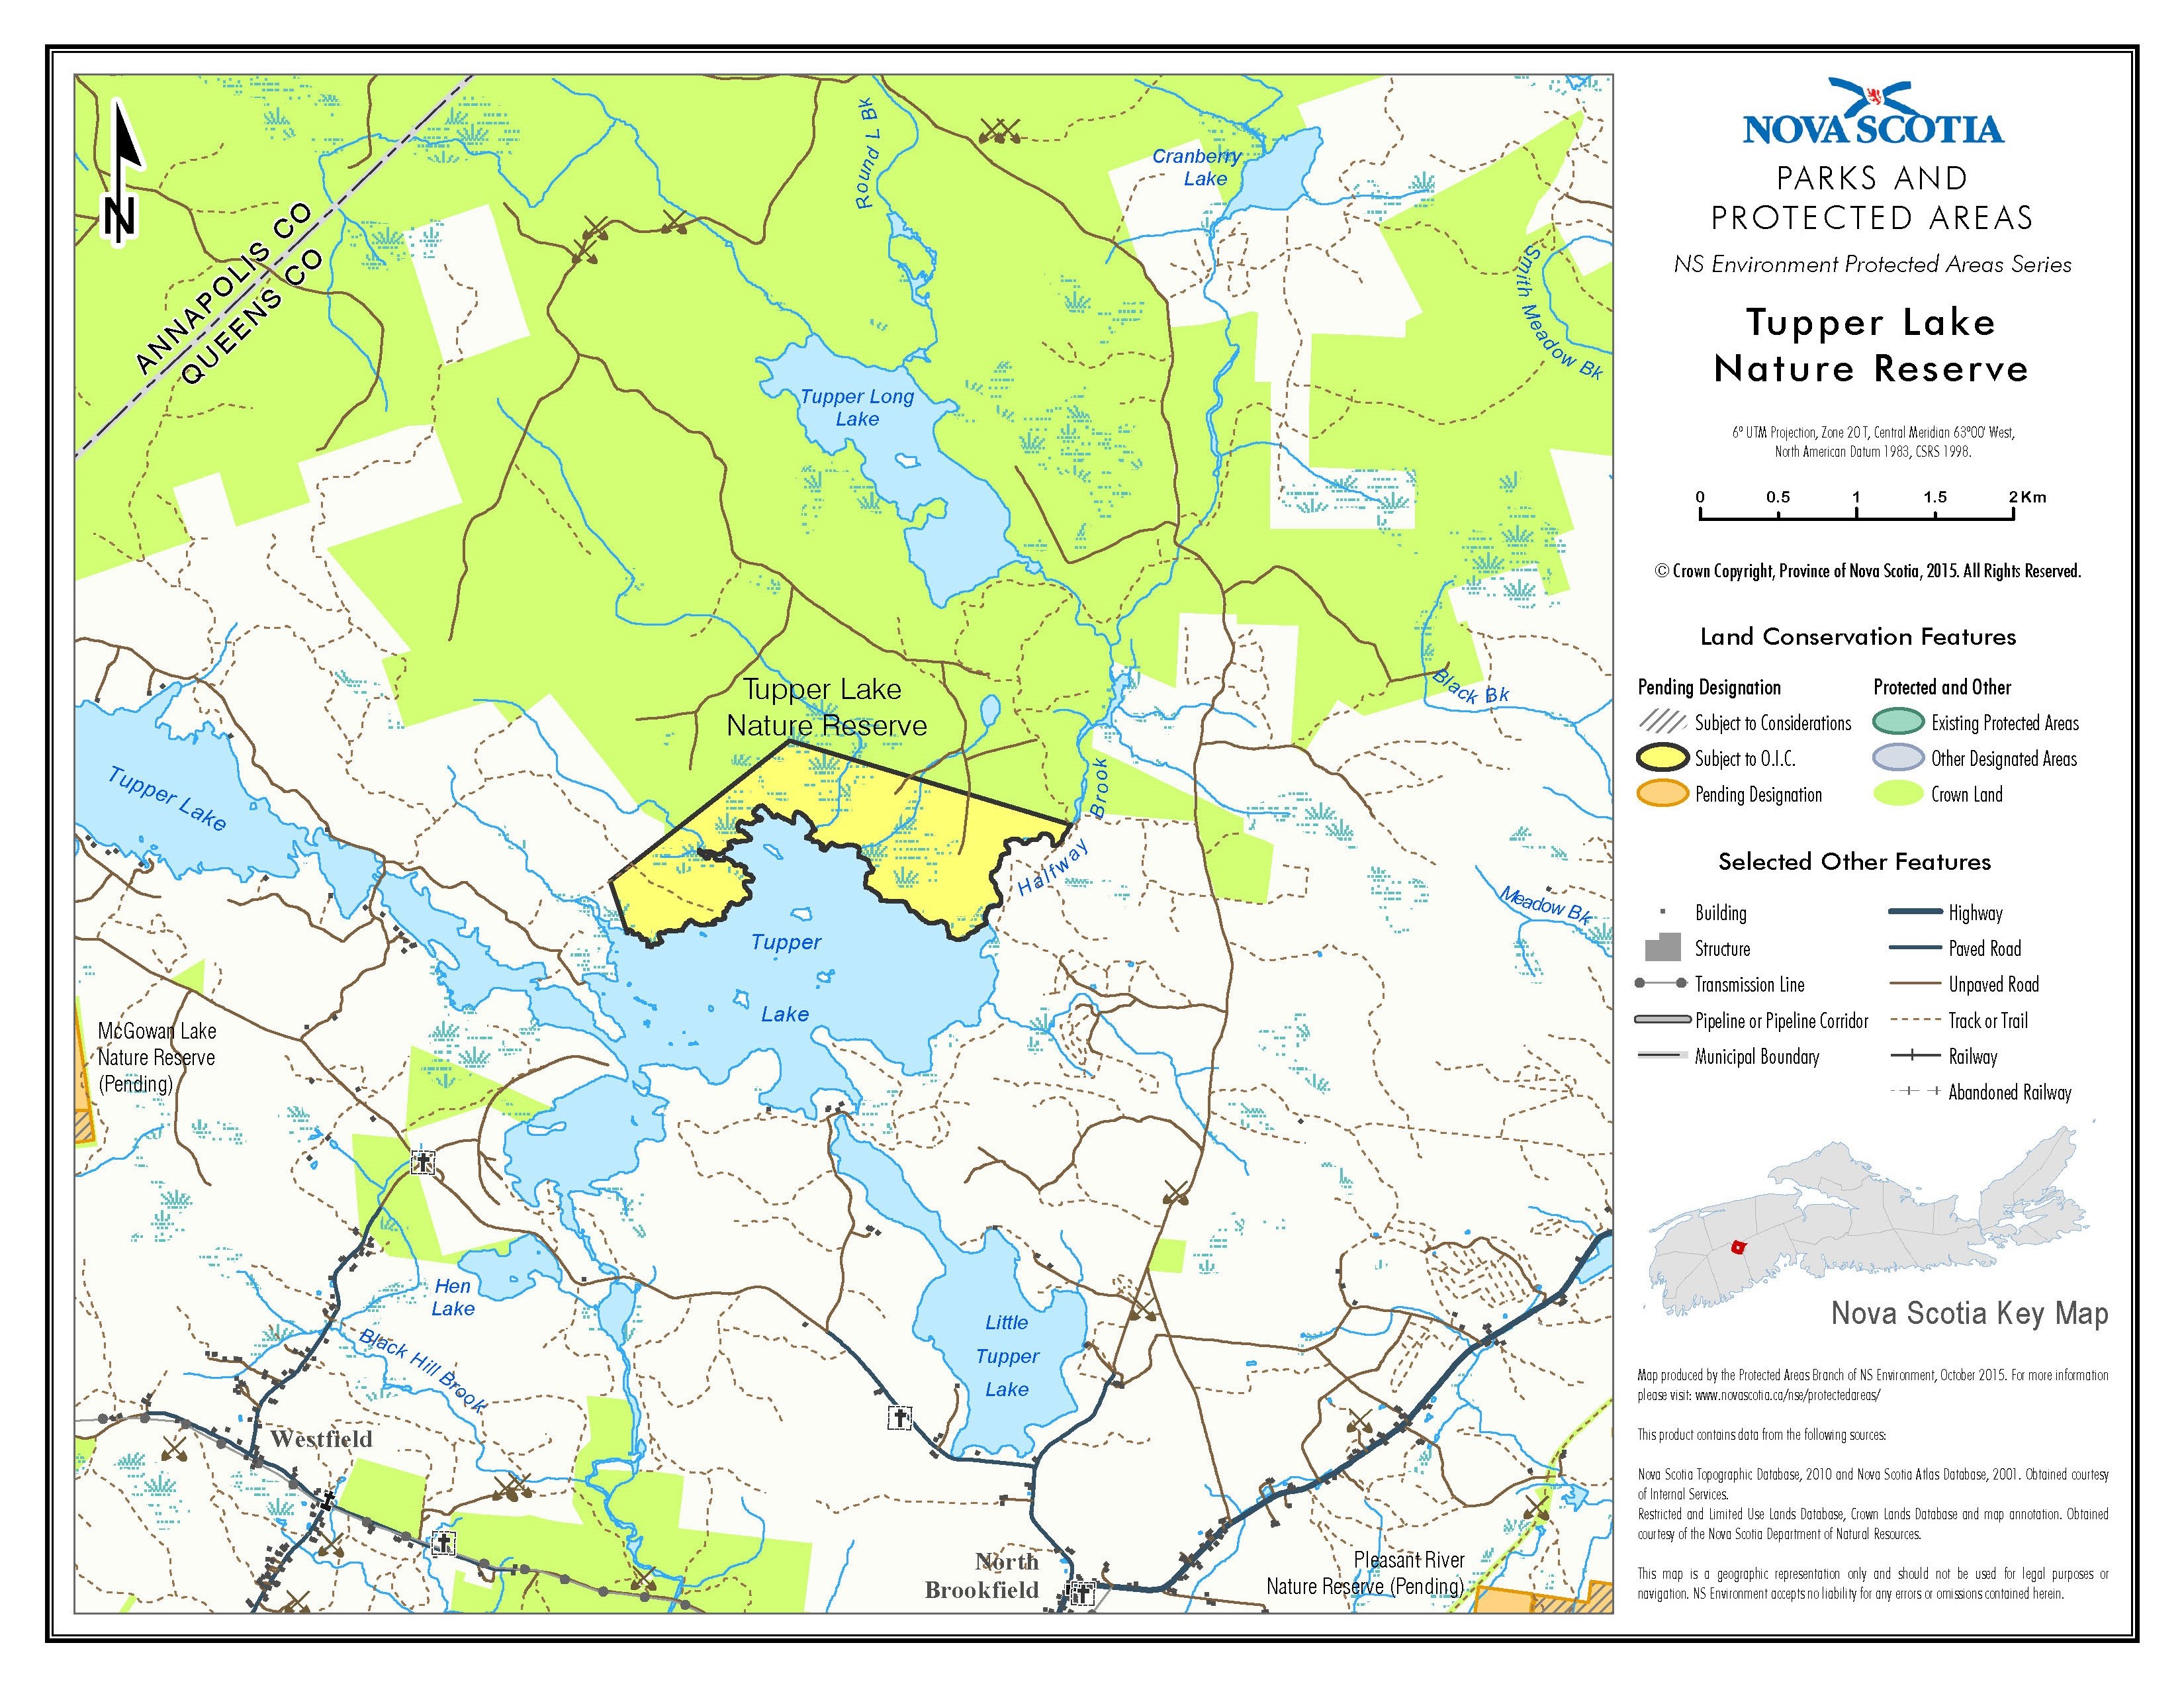 Approximate boundaries of Tupper Lake Nature Reserve